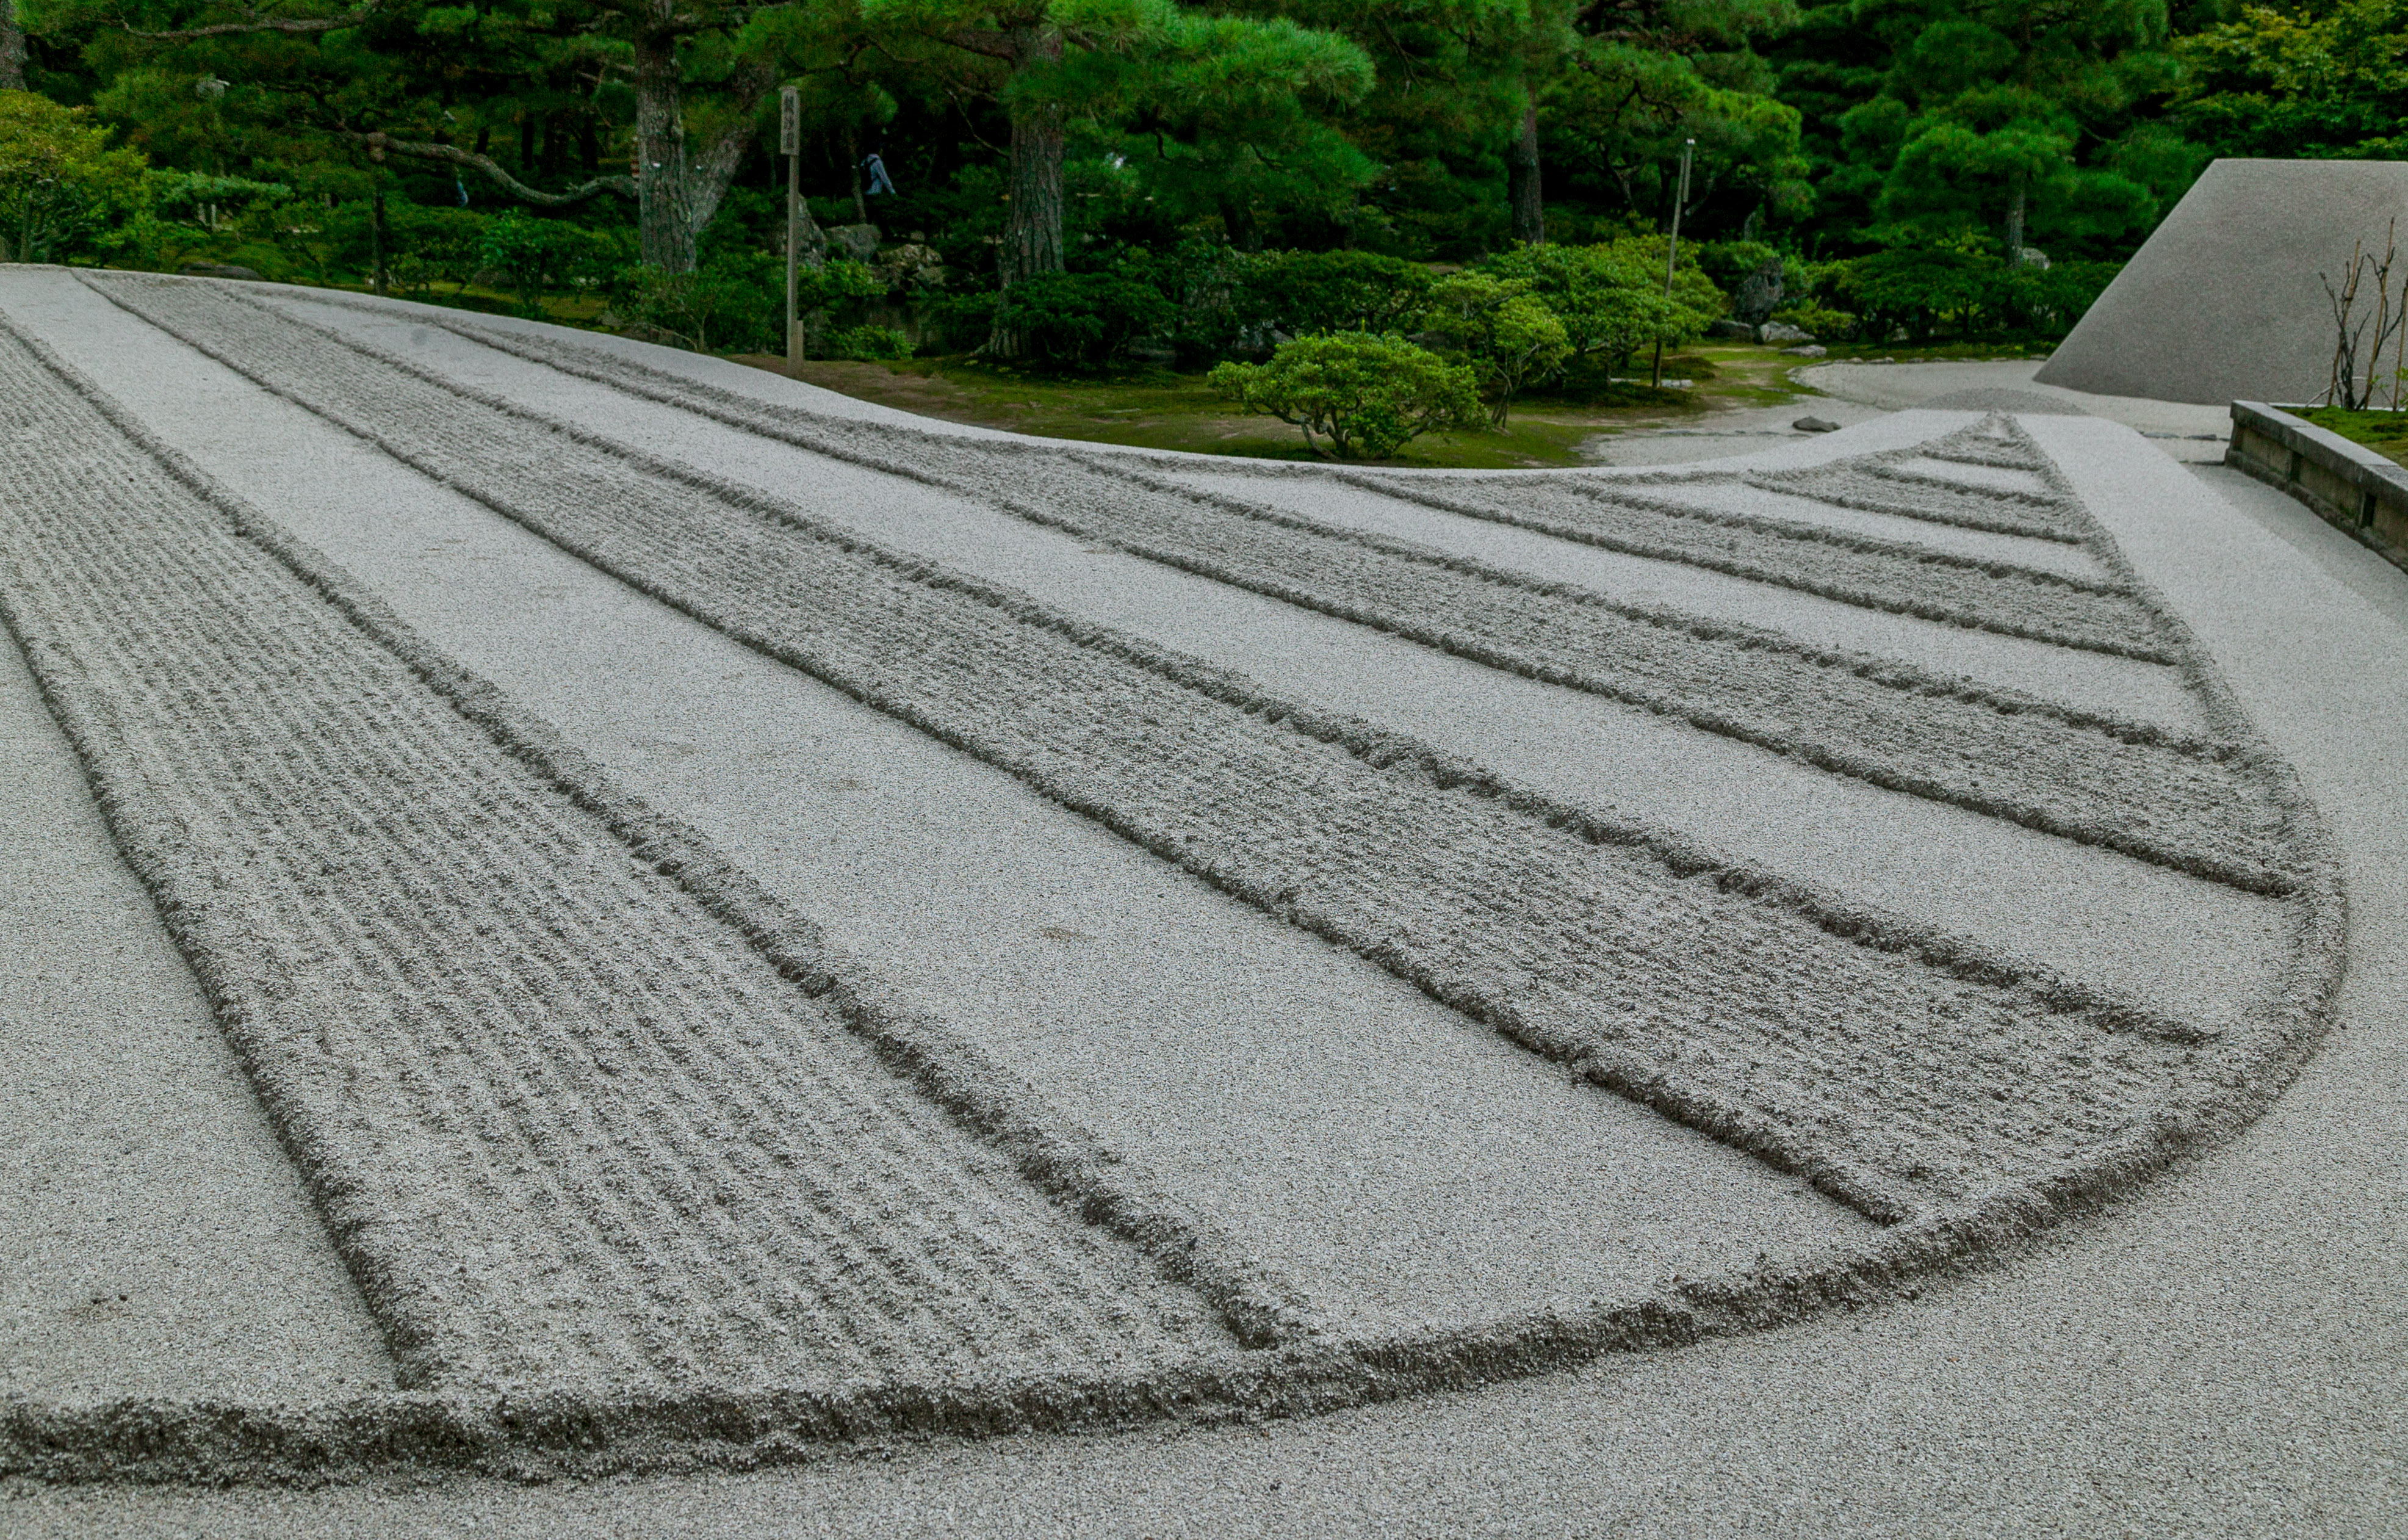 Ginkaku-ji Temple (Temple of the SIlver Pavilion)